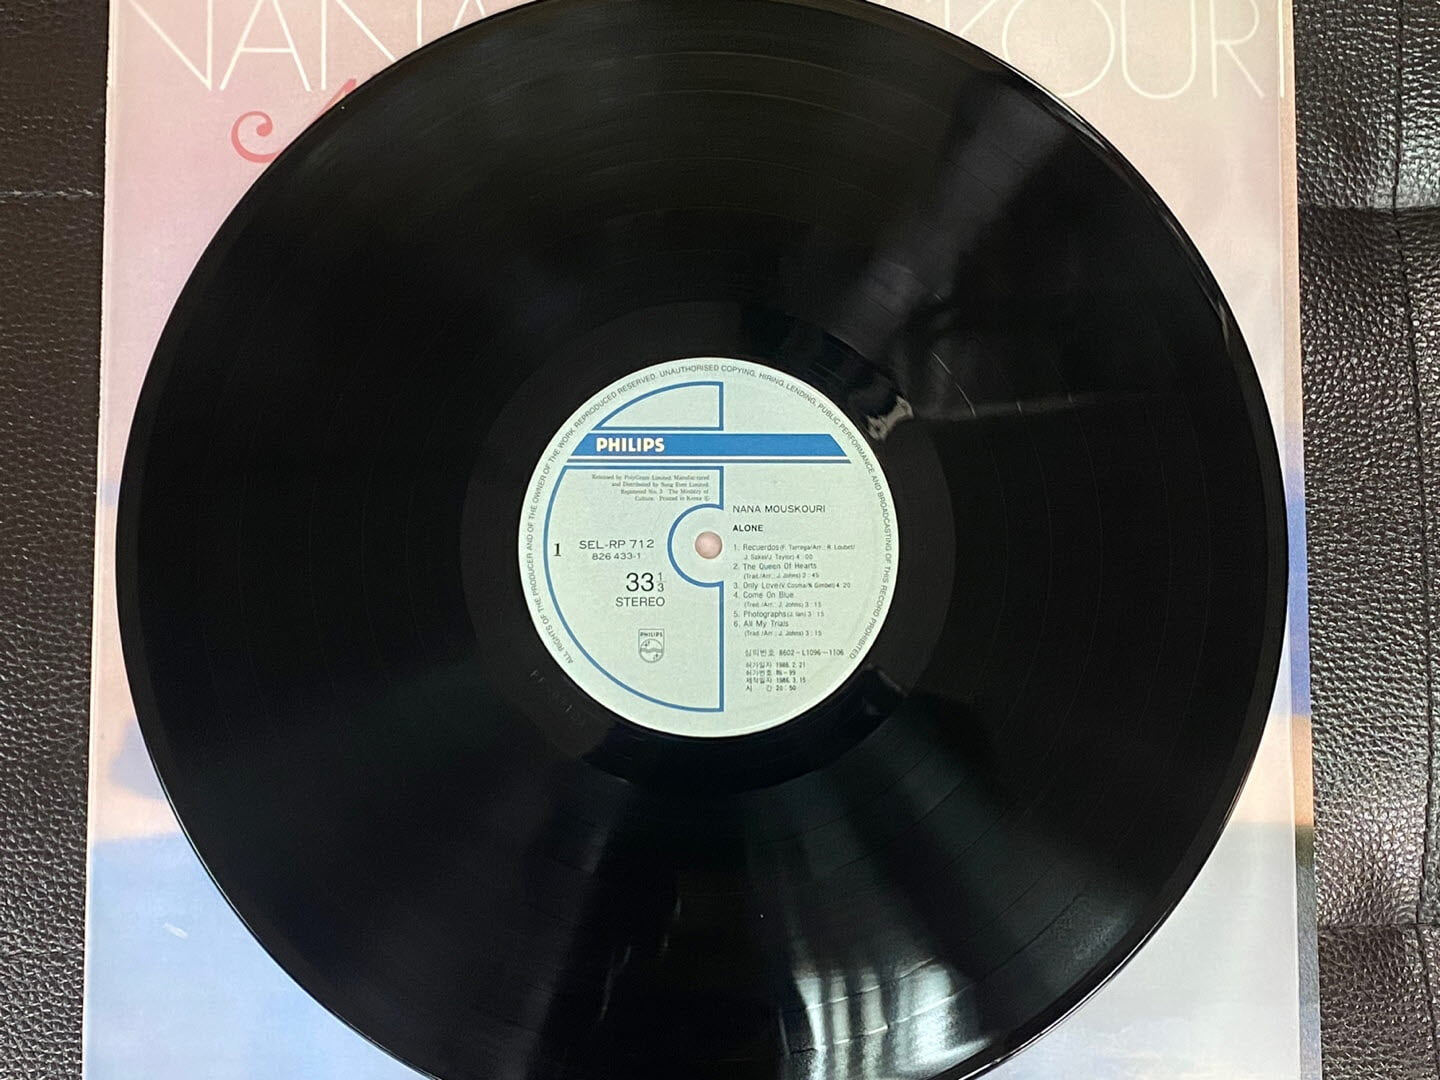 [LP] 나나 무스쿠리 - Nana Mouskouri - Alone LP [성음-라이센스반]